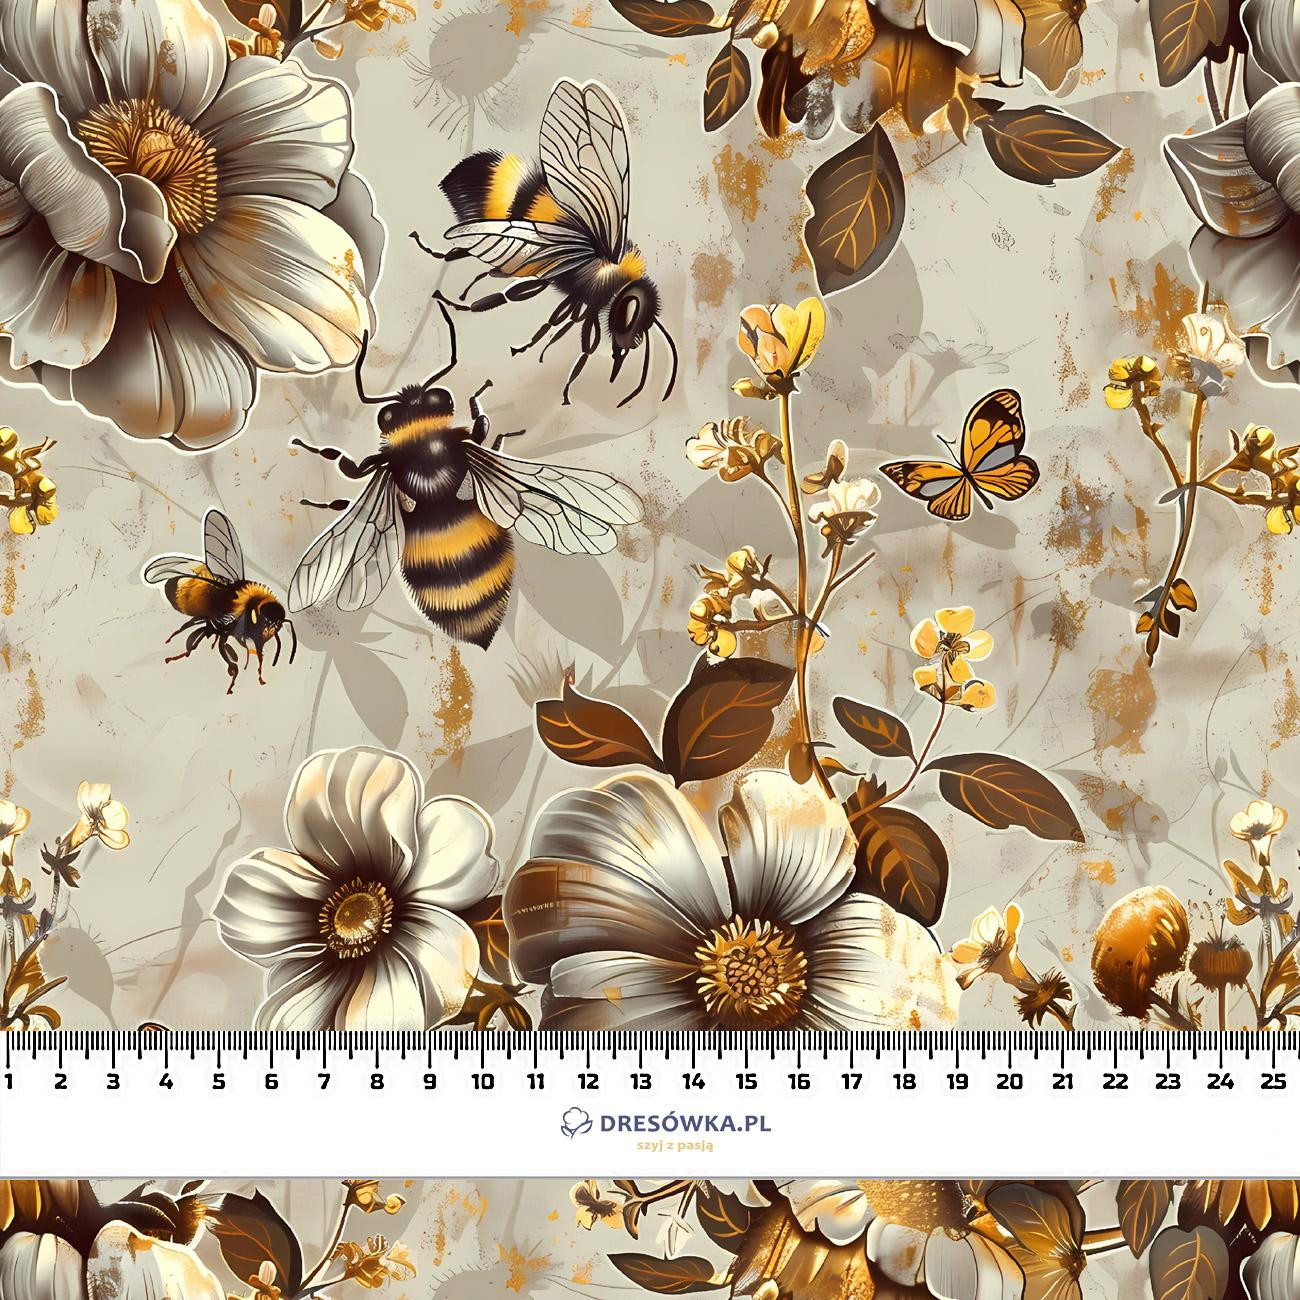 BEES & FLOWERS - Baumwoll Musselin